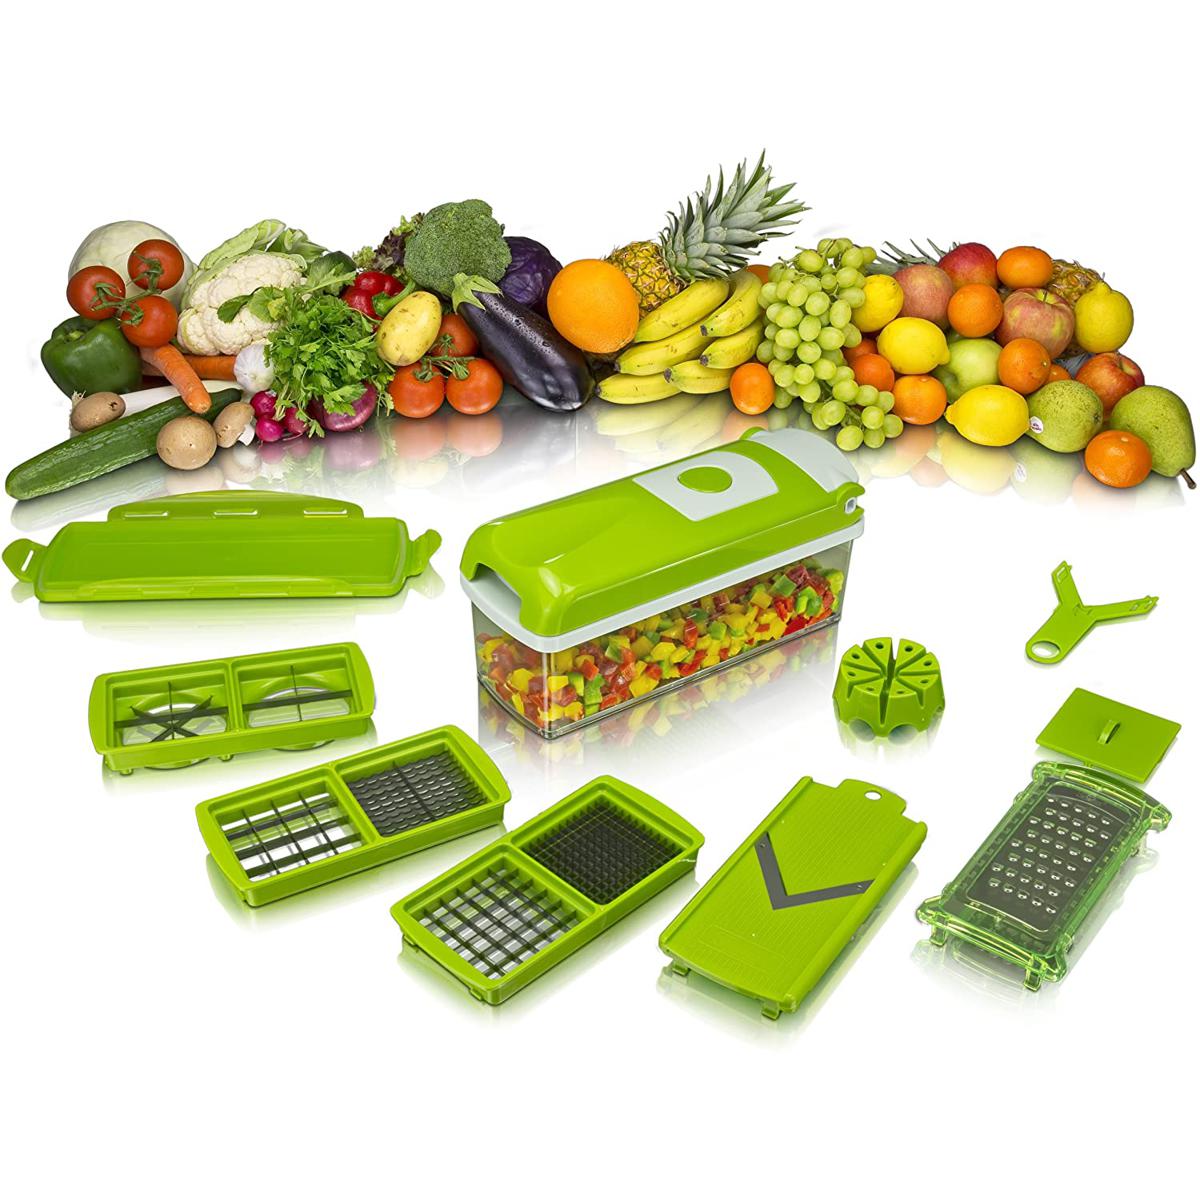 FRDE 12 in 1 Multi-Purpose Vegetable and Fruit Chopper, Fruit